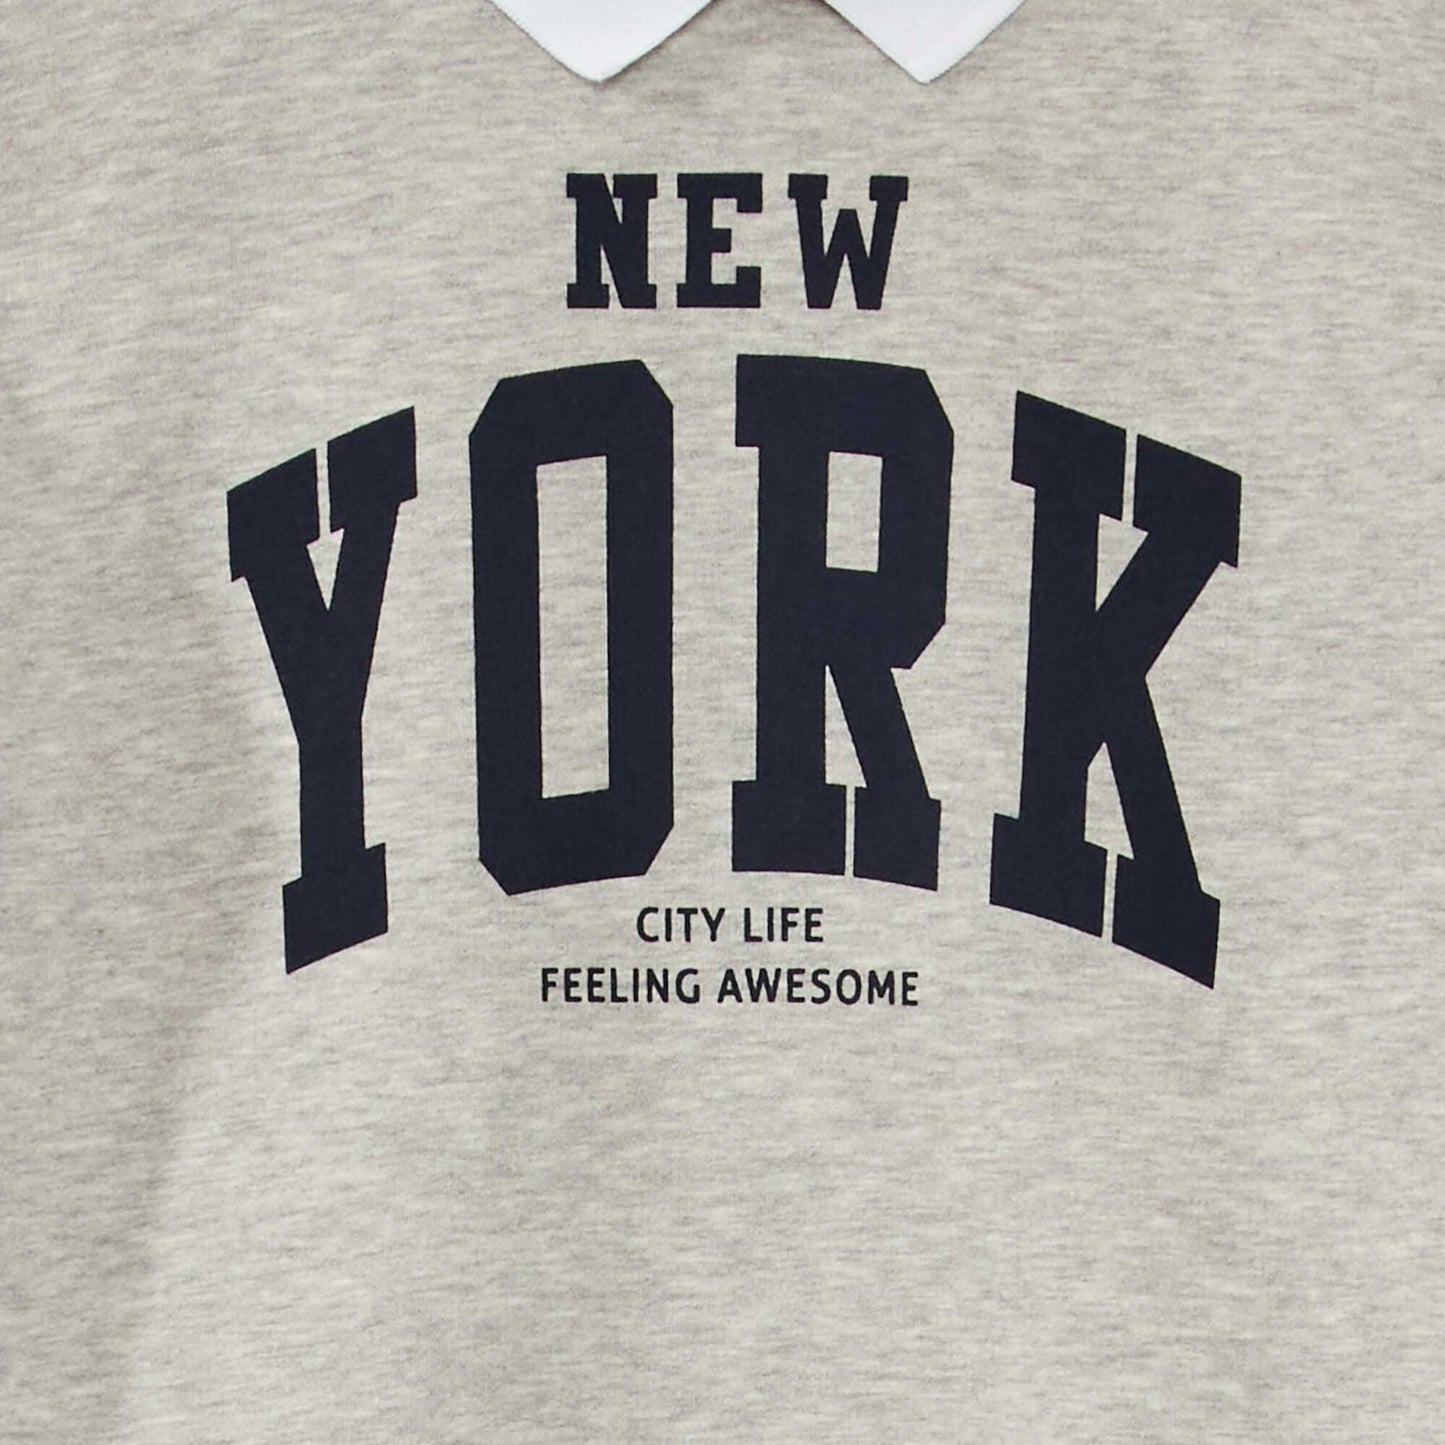 Robe sweat en molleton 'New York' gris